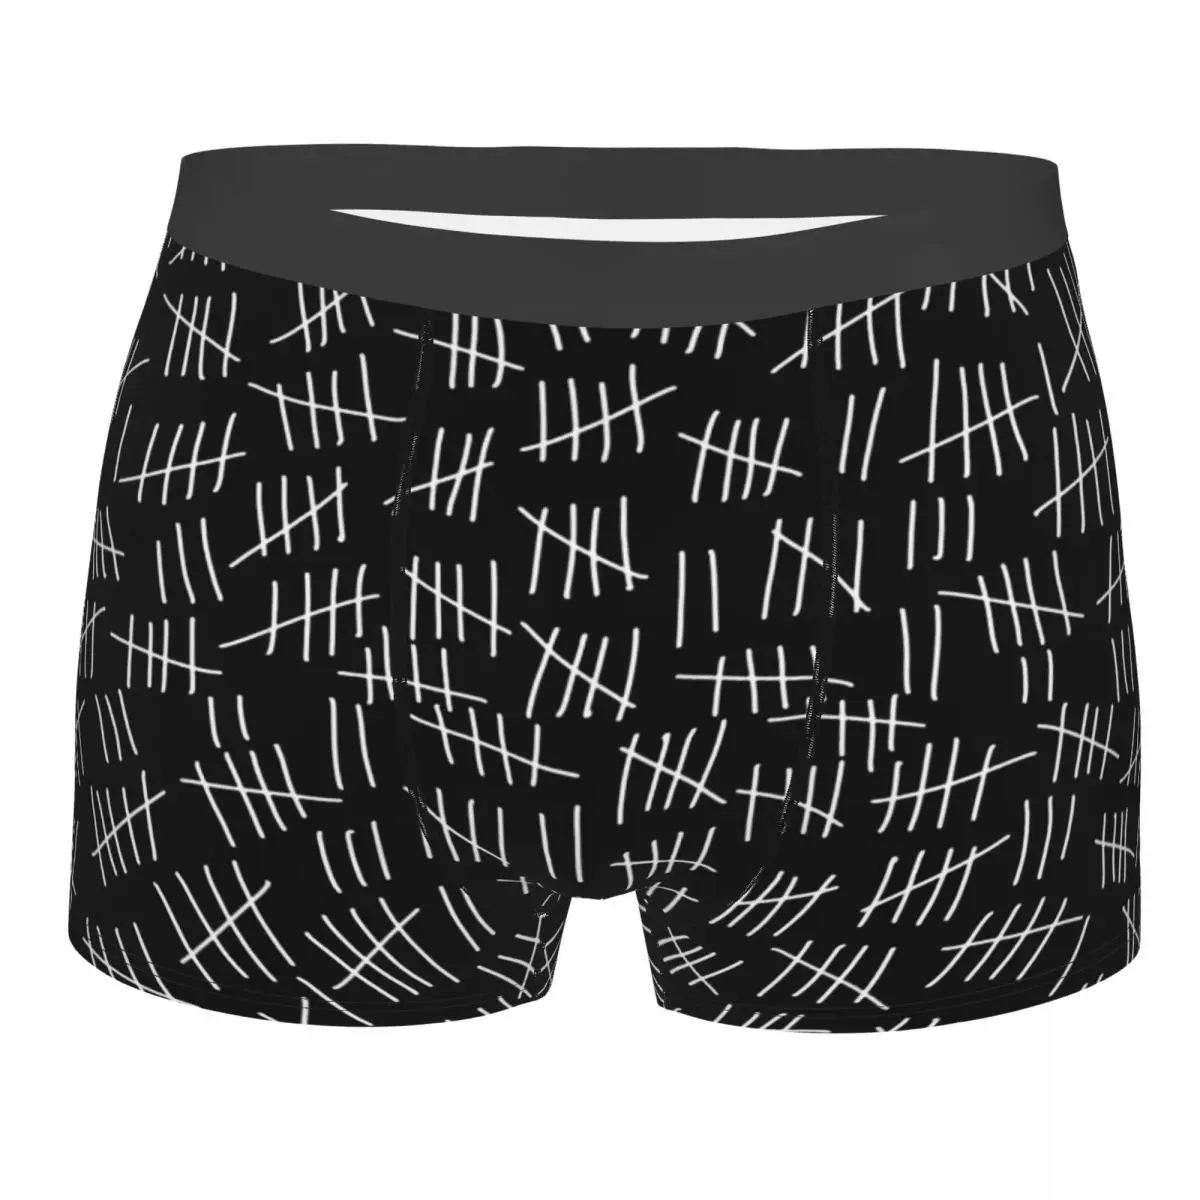 

April 23rd Geek Underpants Breathbale Panties Male Underwear Print Shorts Boxer Briefs